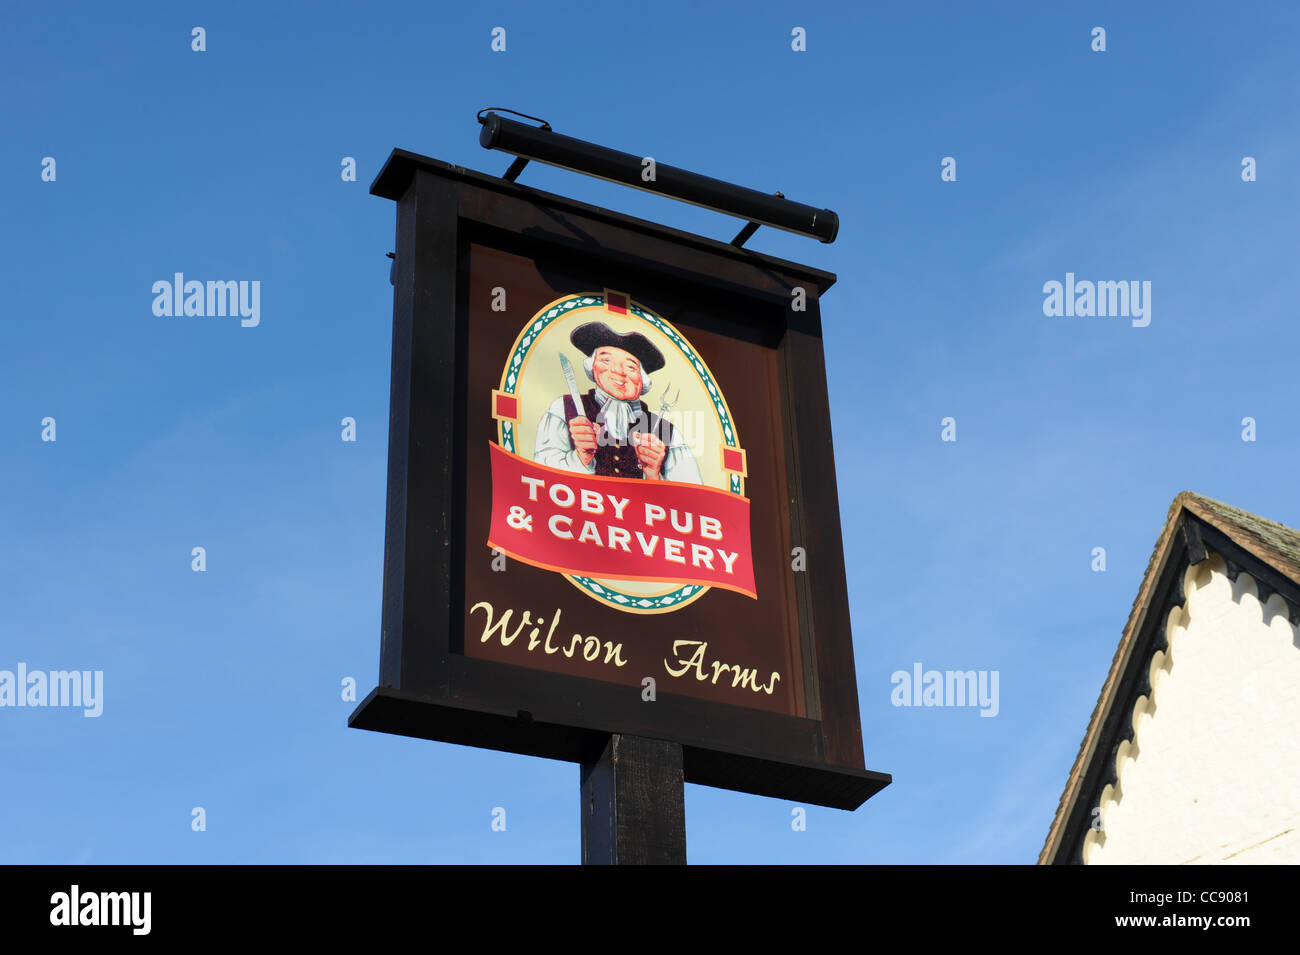 Wislon Arms Pub anmelden Knowle in Warwickshire England Uk Stockfoto